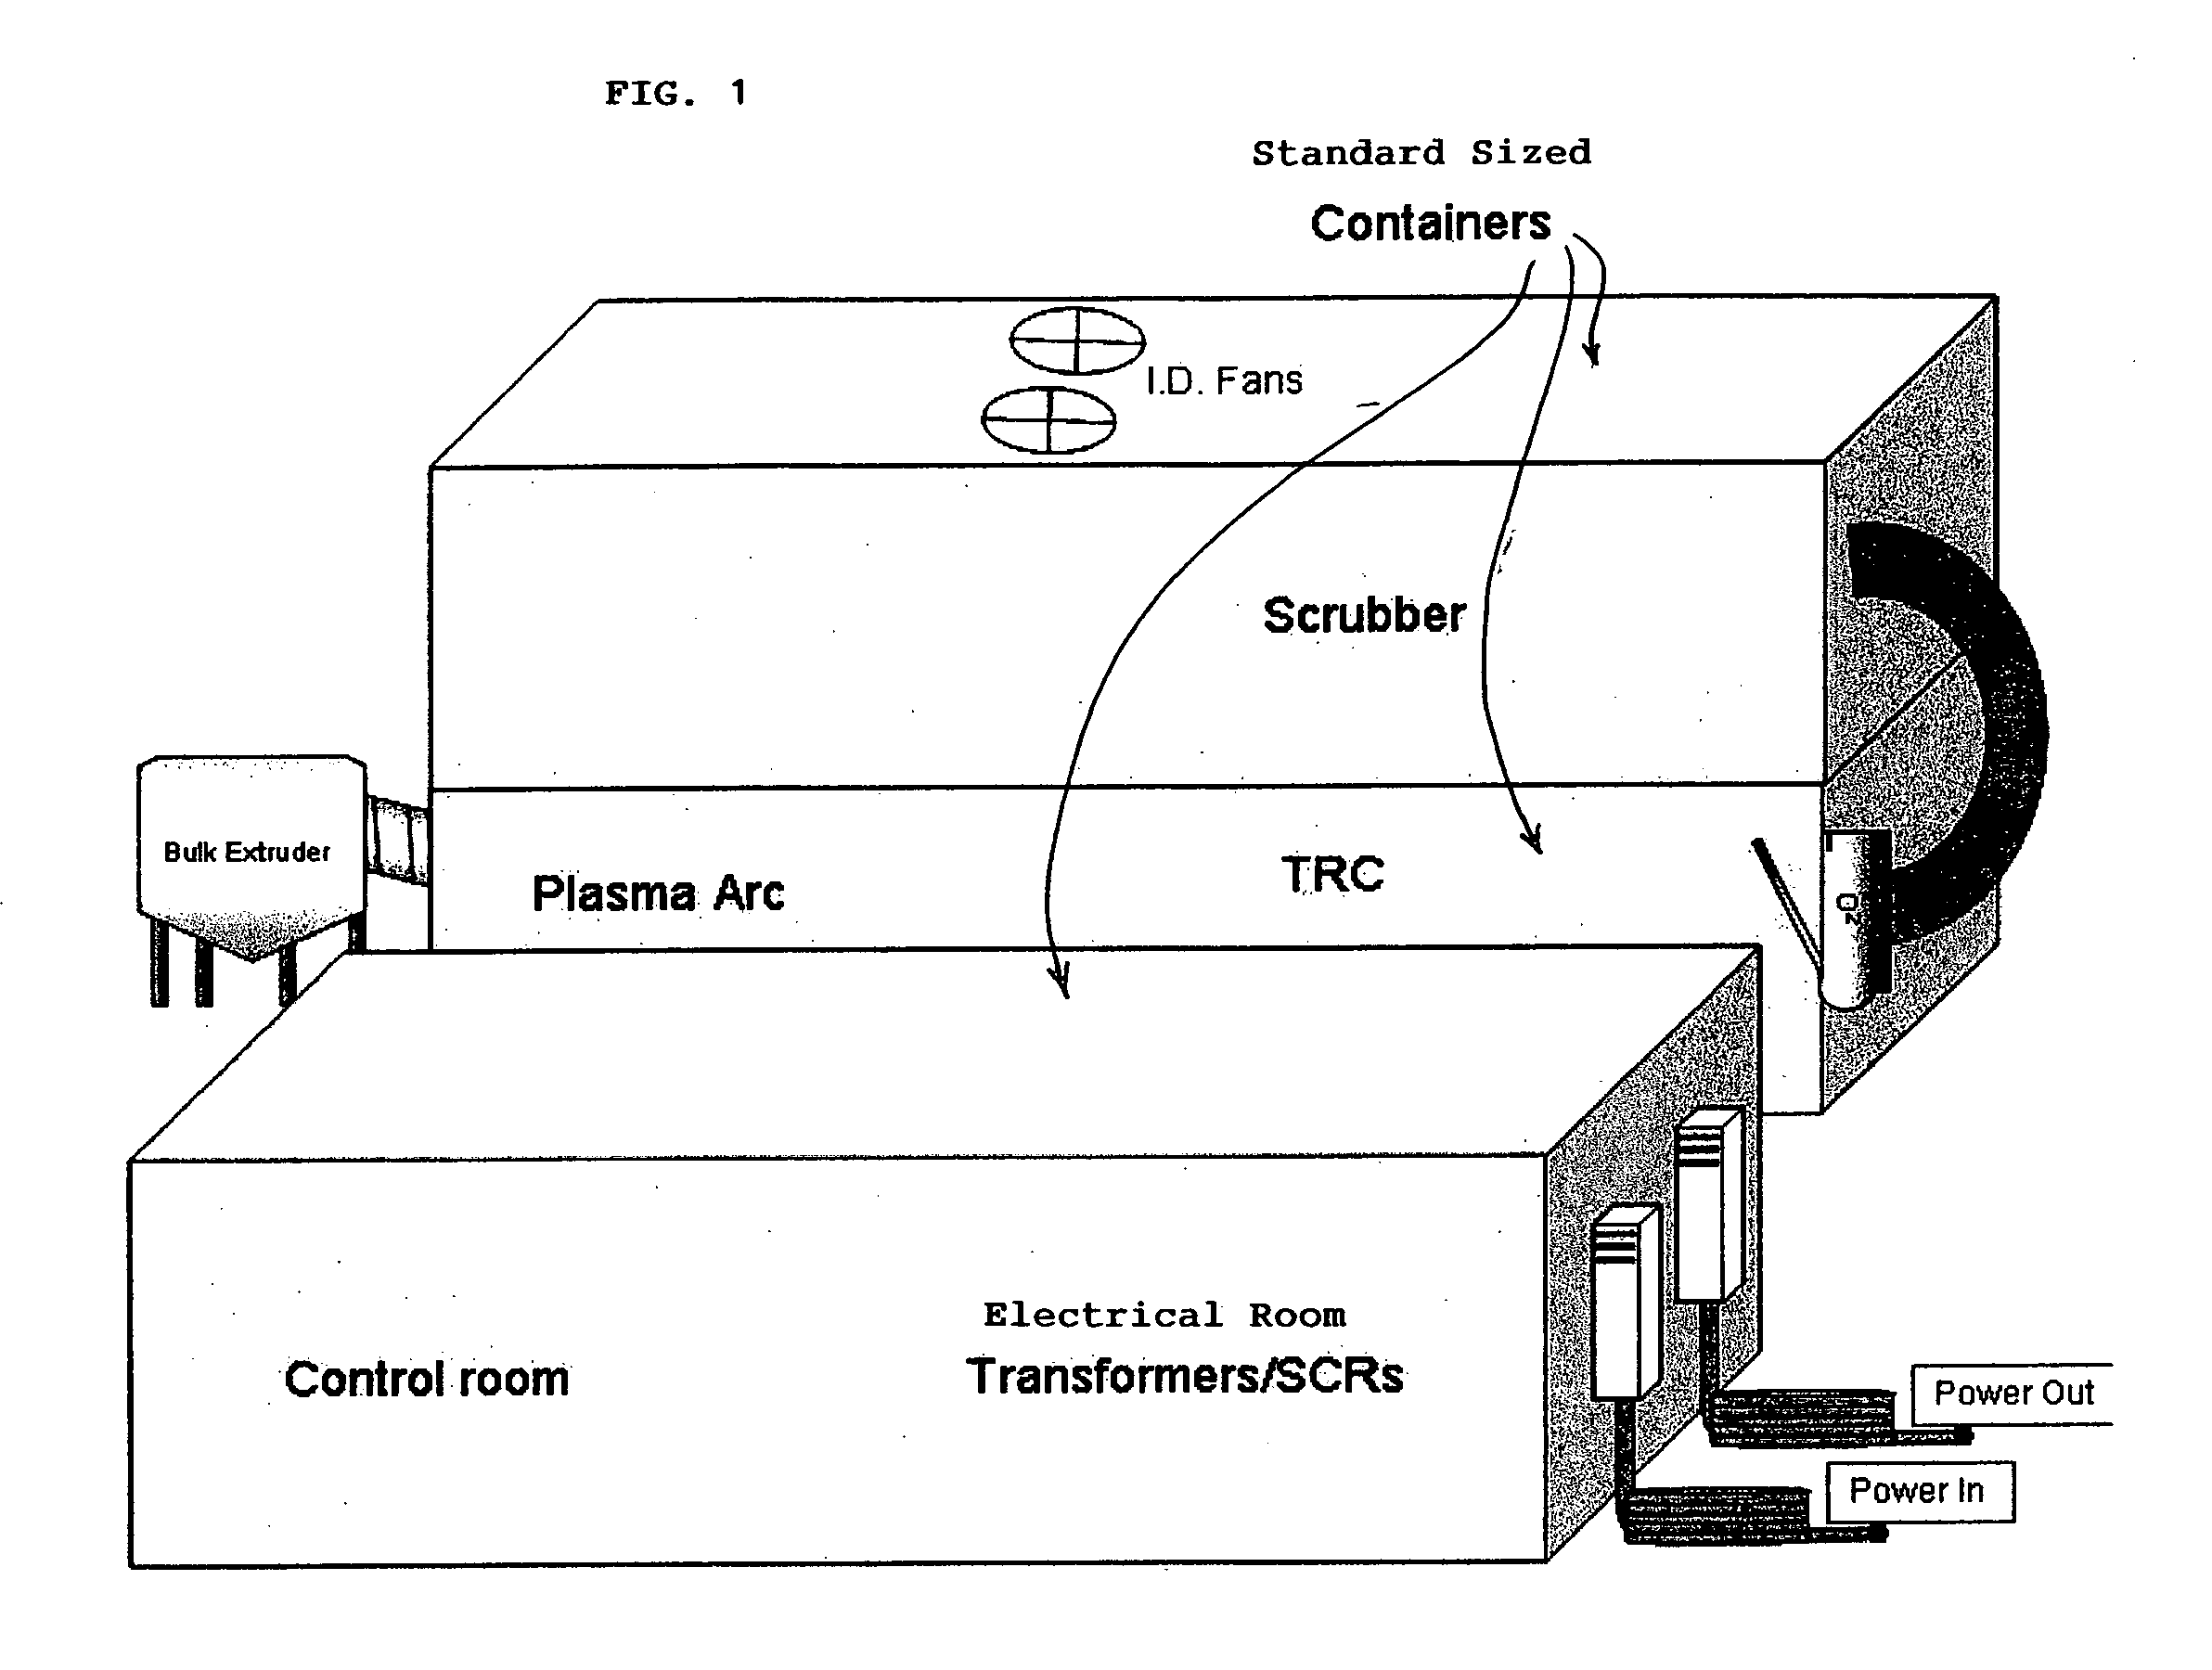 Modular plasma ARC waste vitrification system